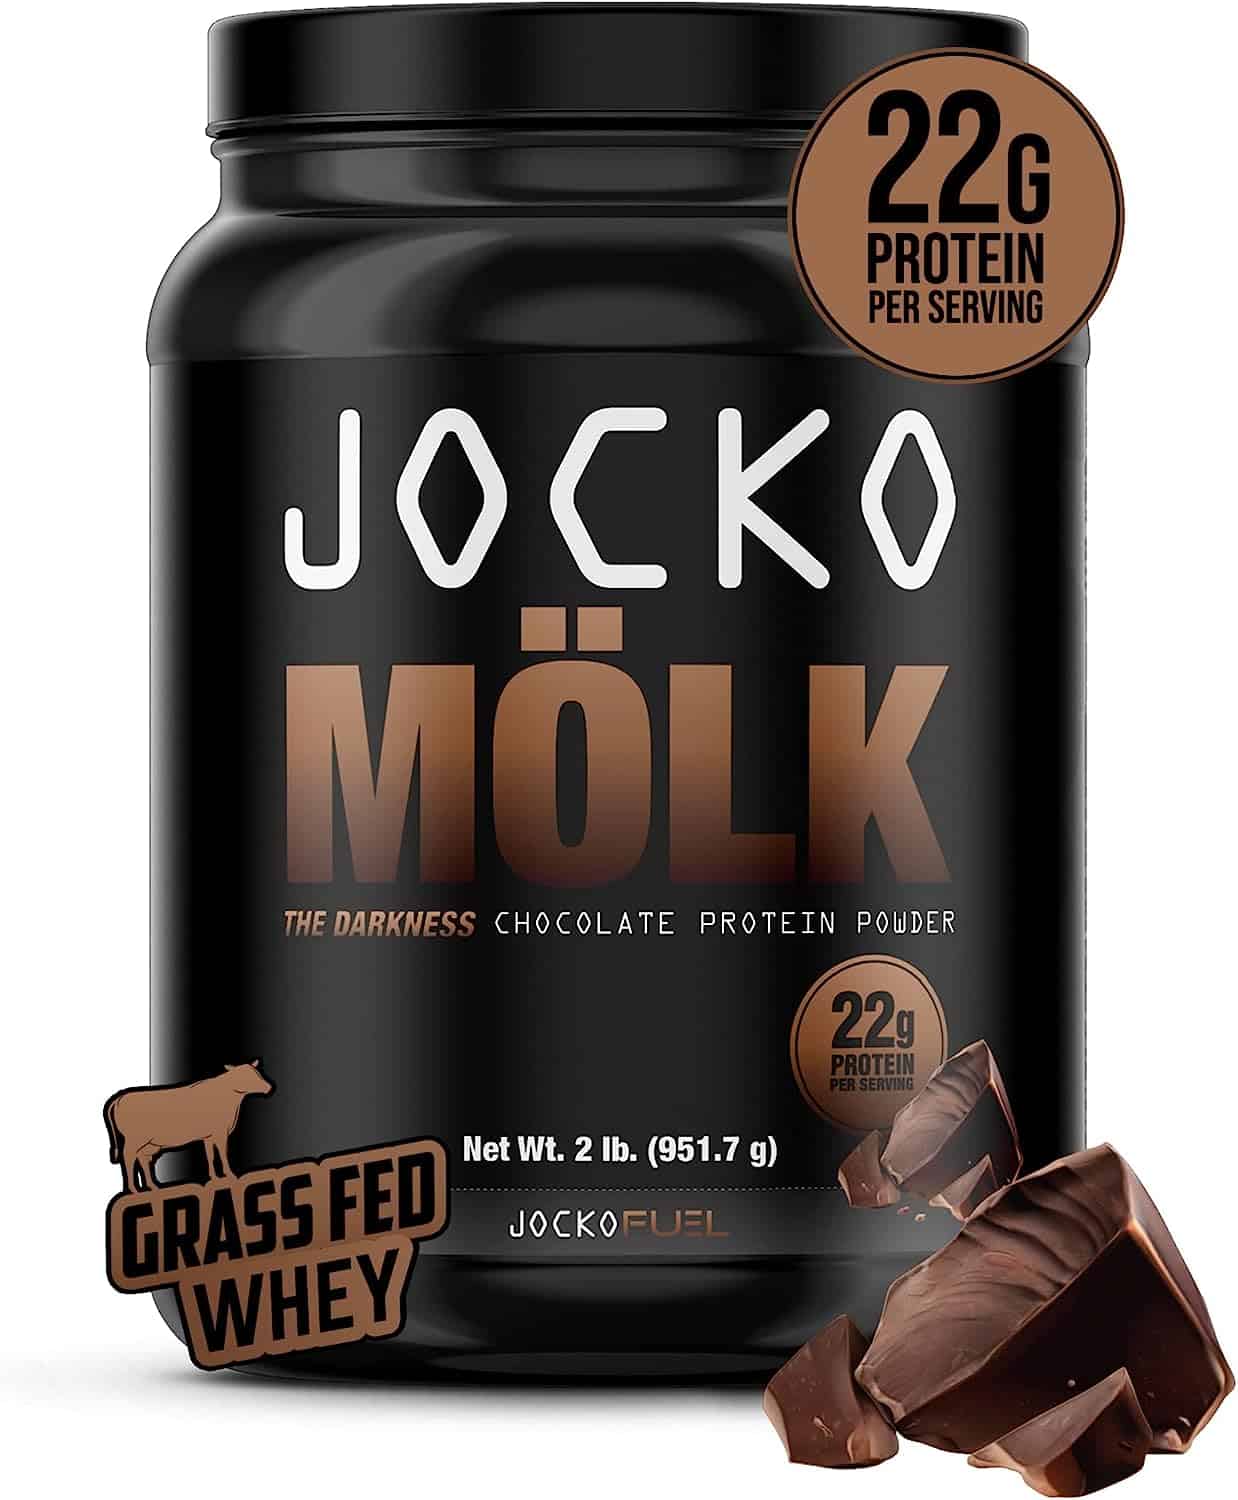 Jocko Mölk Protein Powder